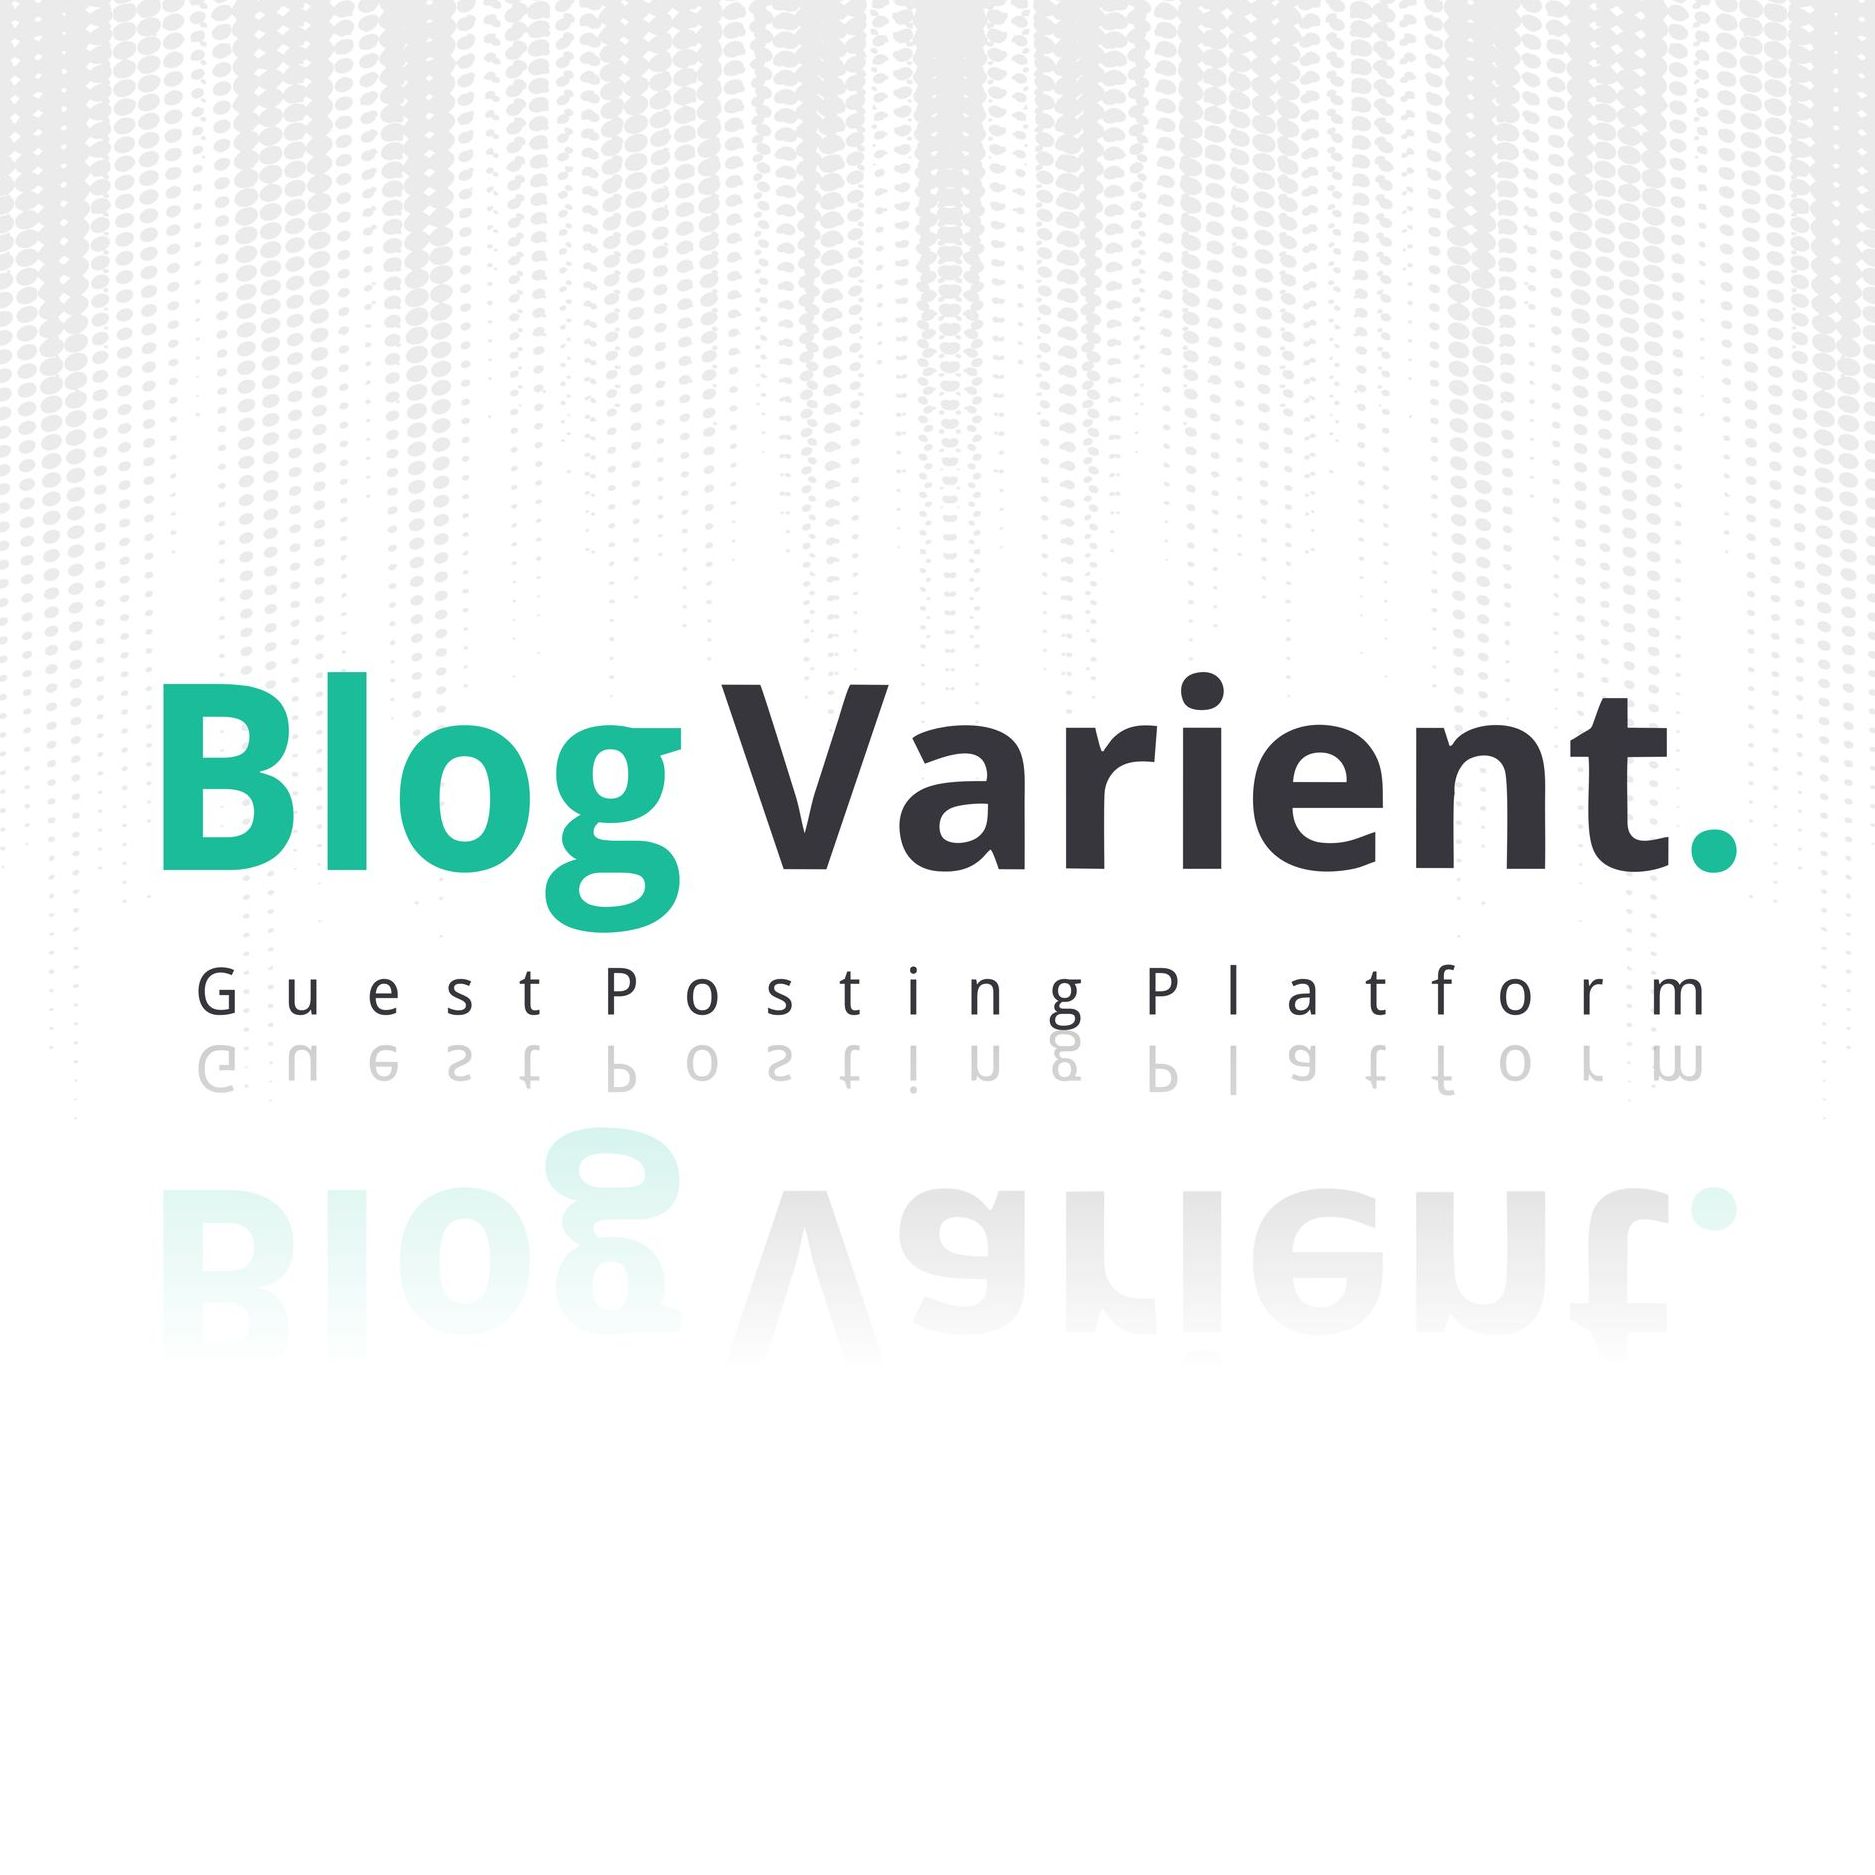 BlogVarient – Guest Posting Site